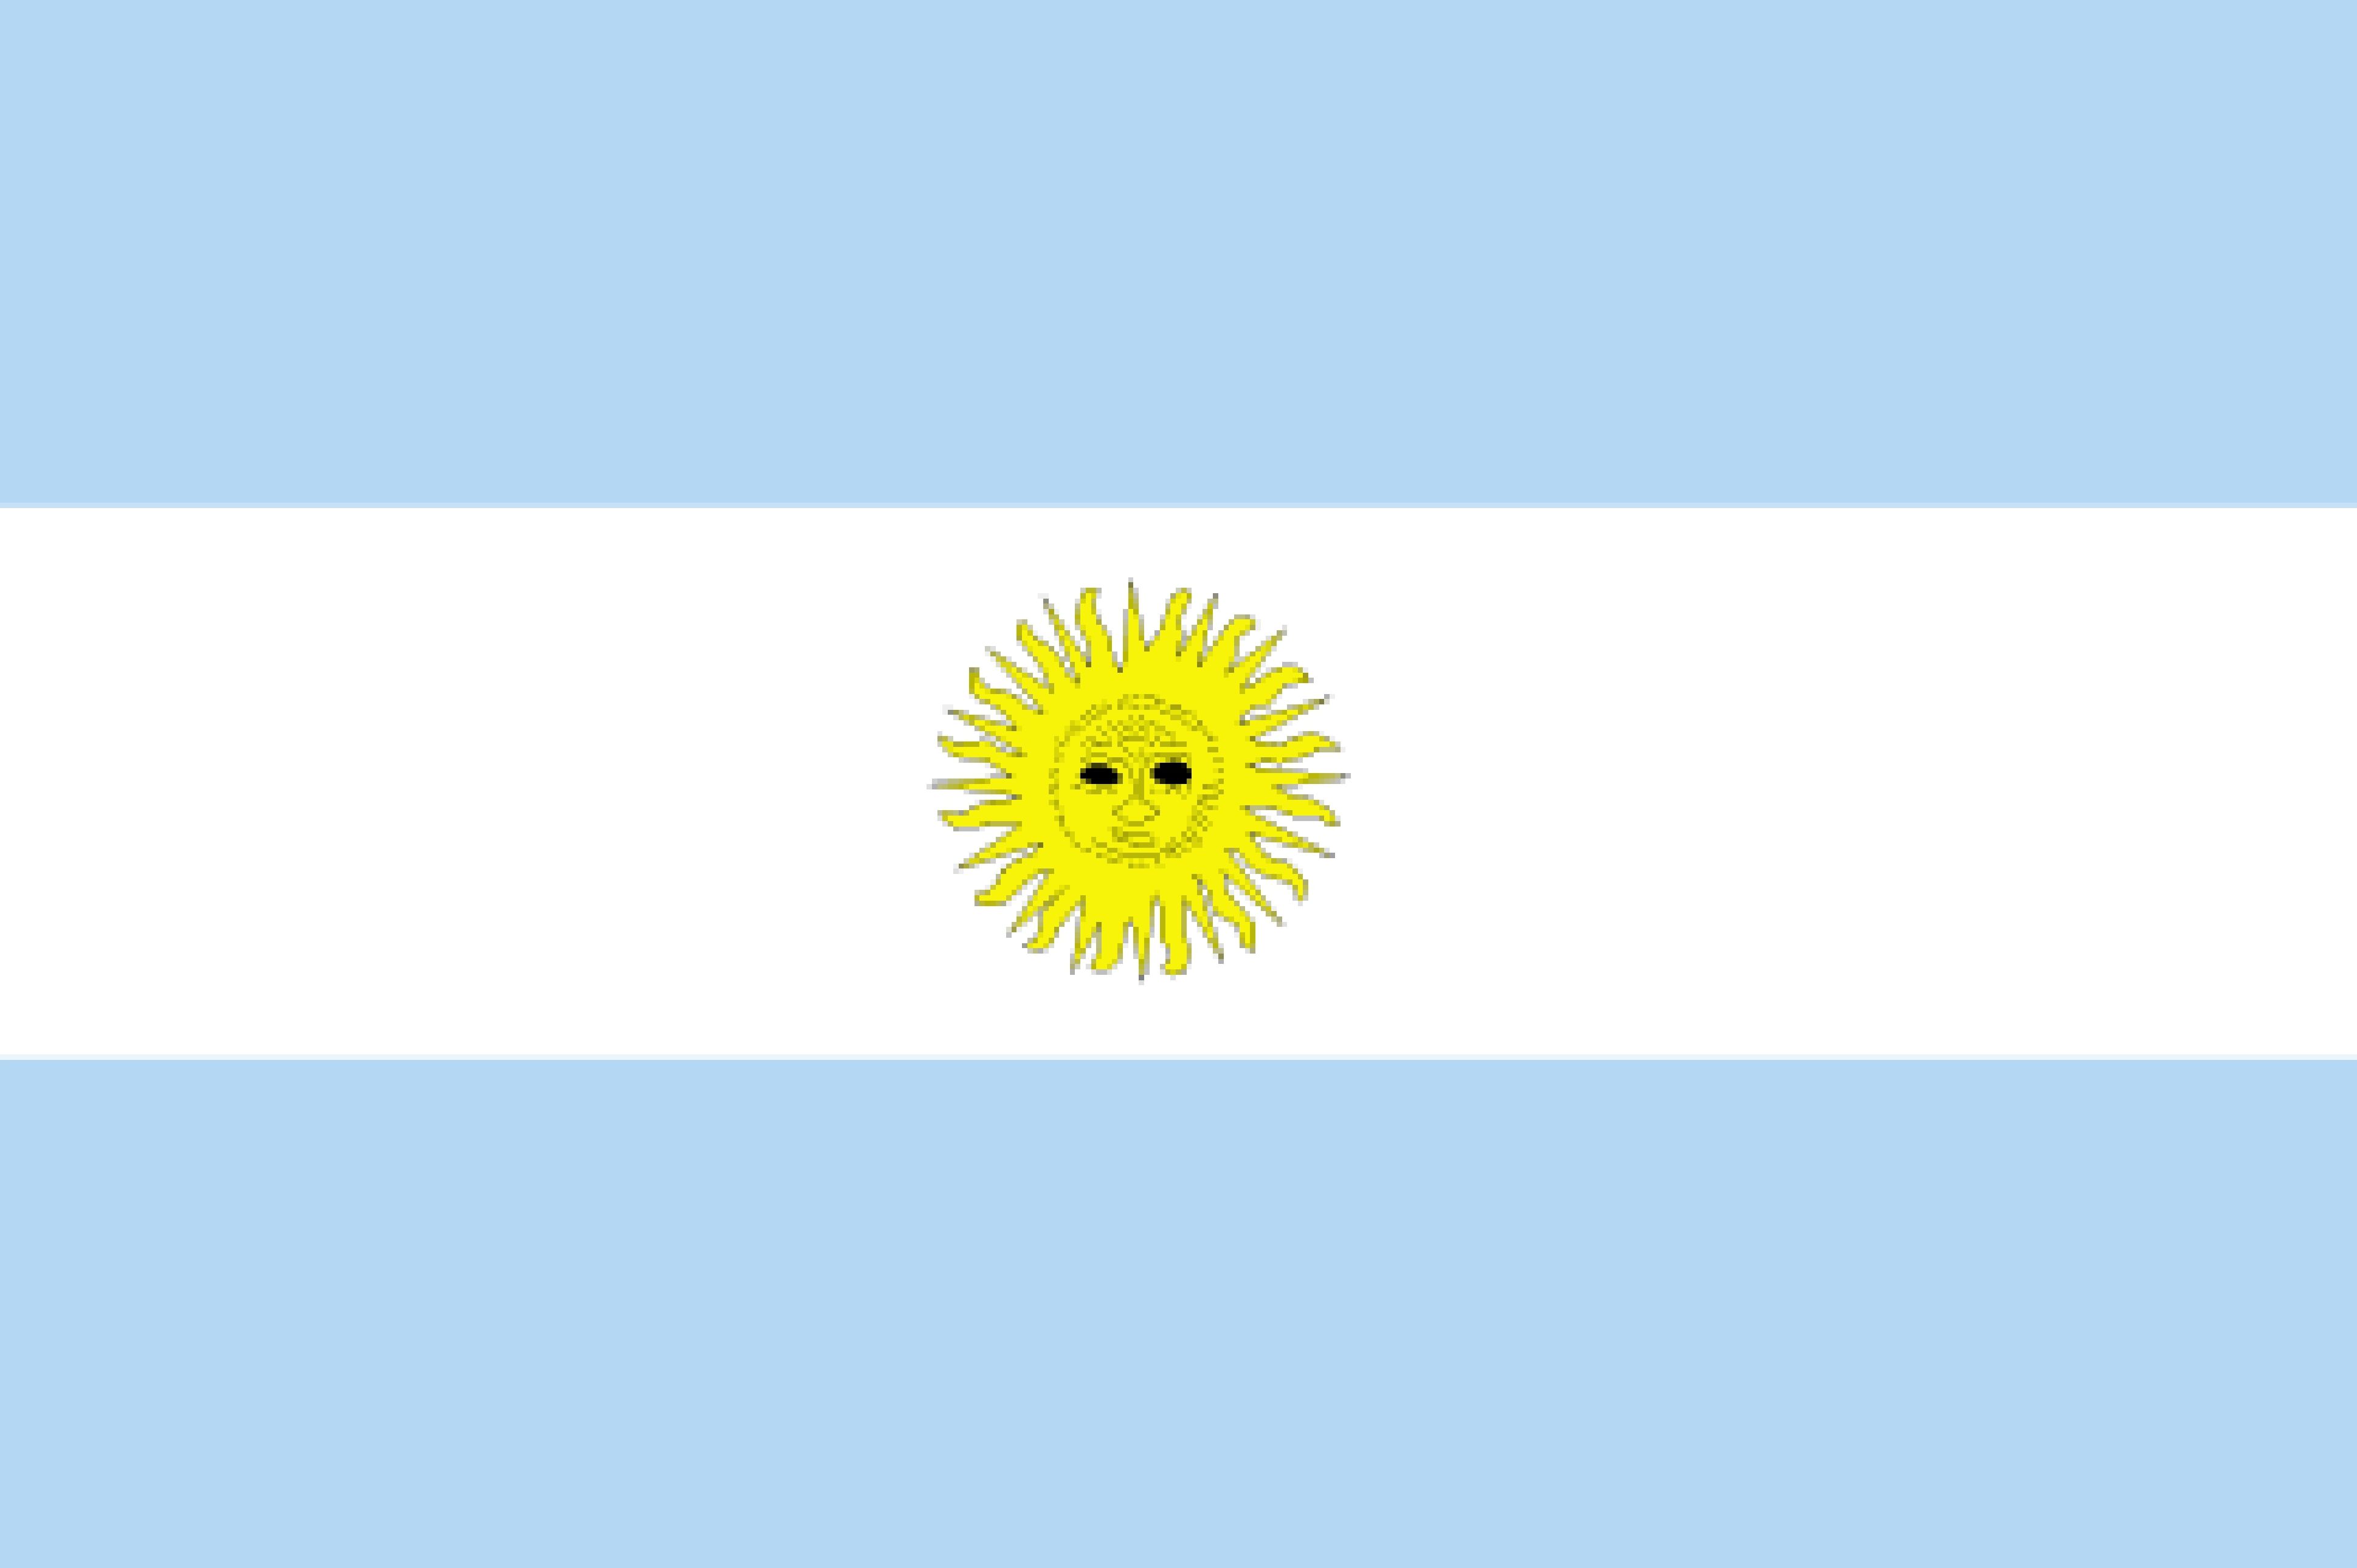 HQ 3877x2580px Resolución, 16/08/2015, Bandera Argentina # 617788